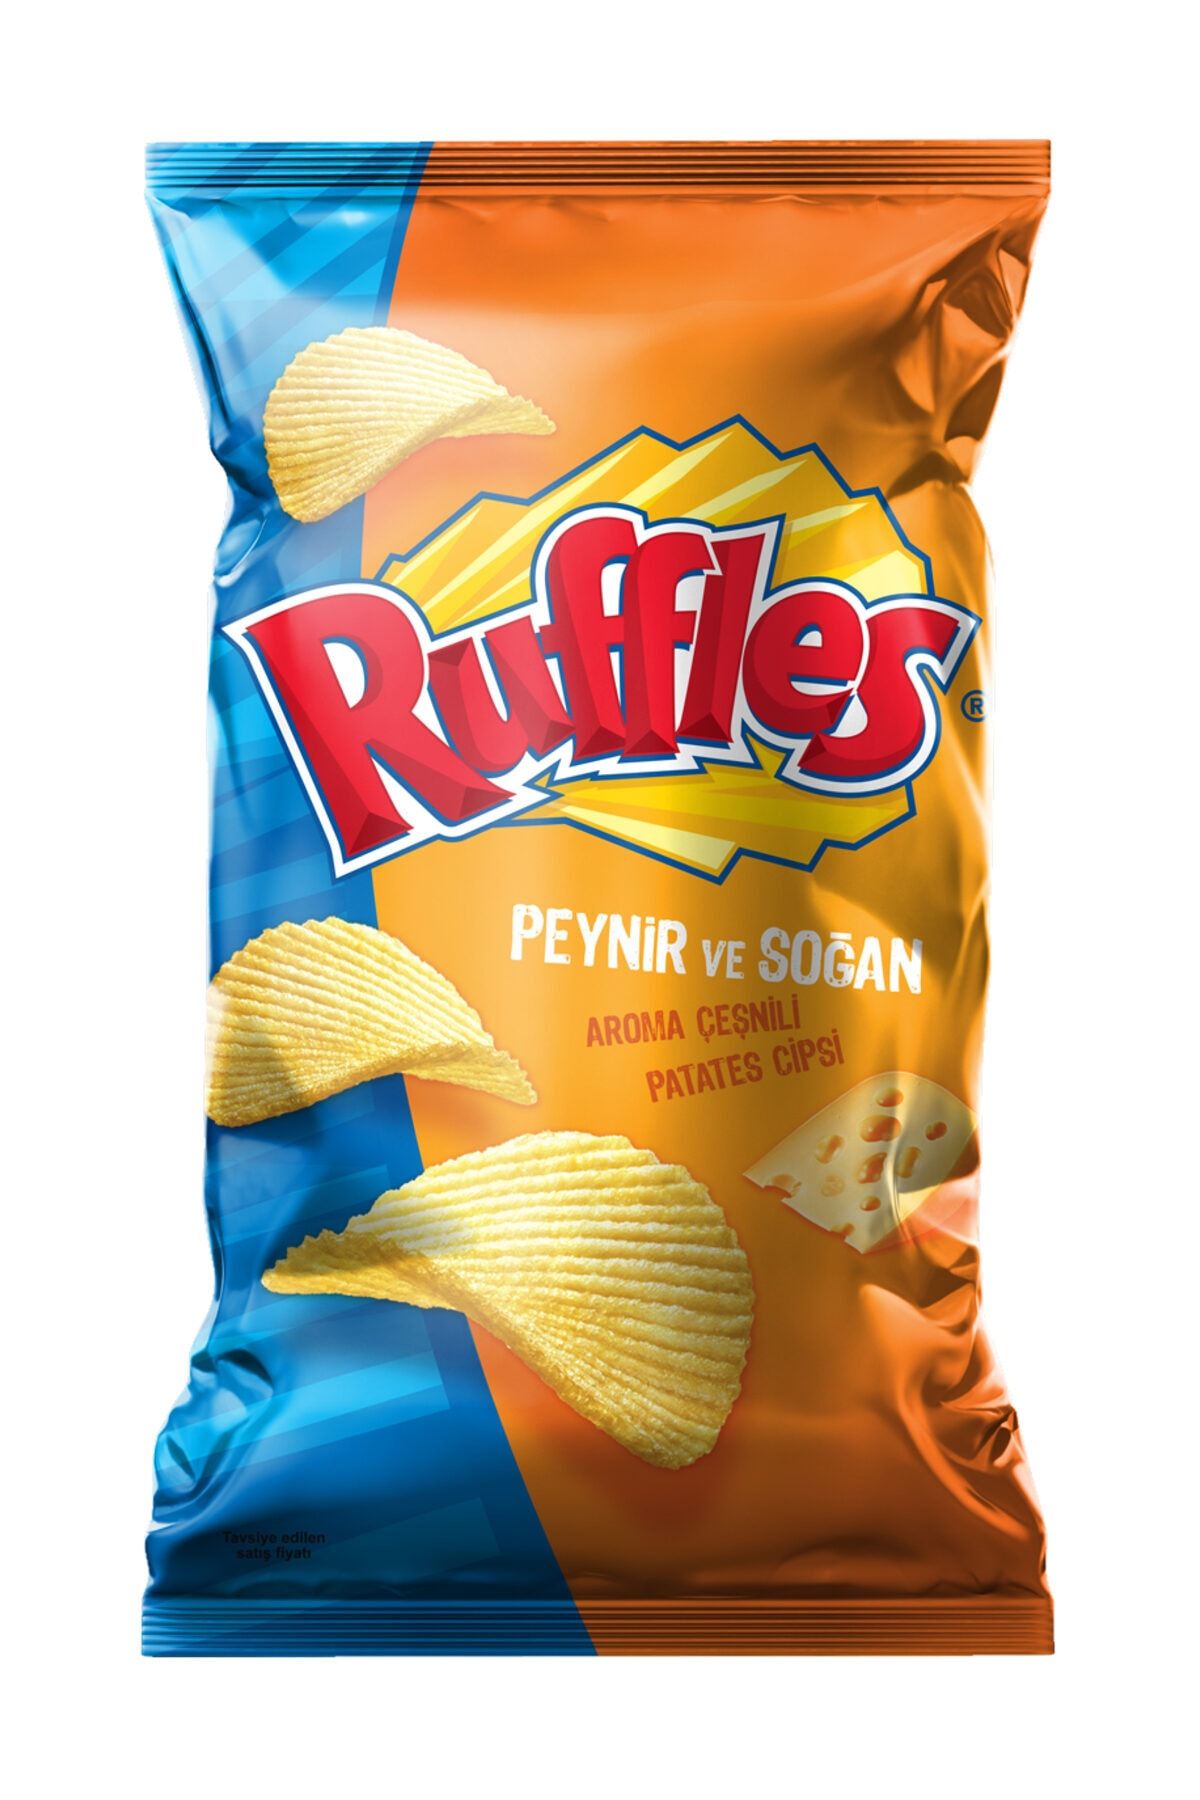 Ruffles Peynirli Soğanlı Süper Boy Patates Cipsi